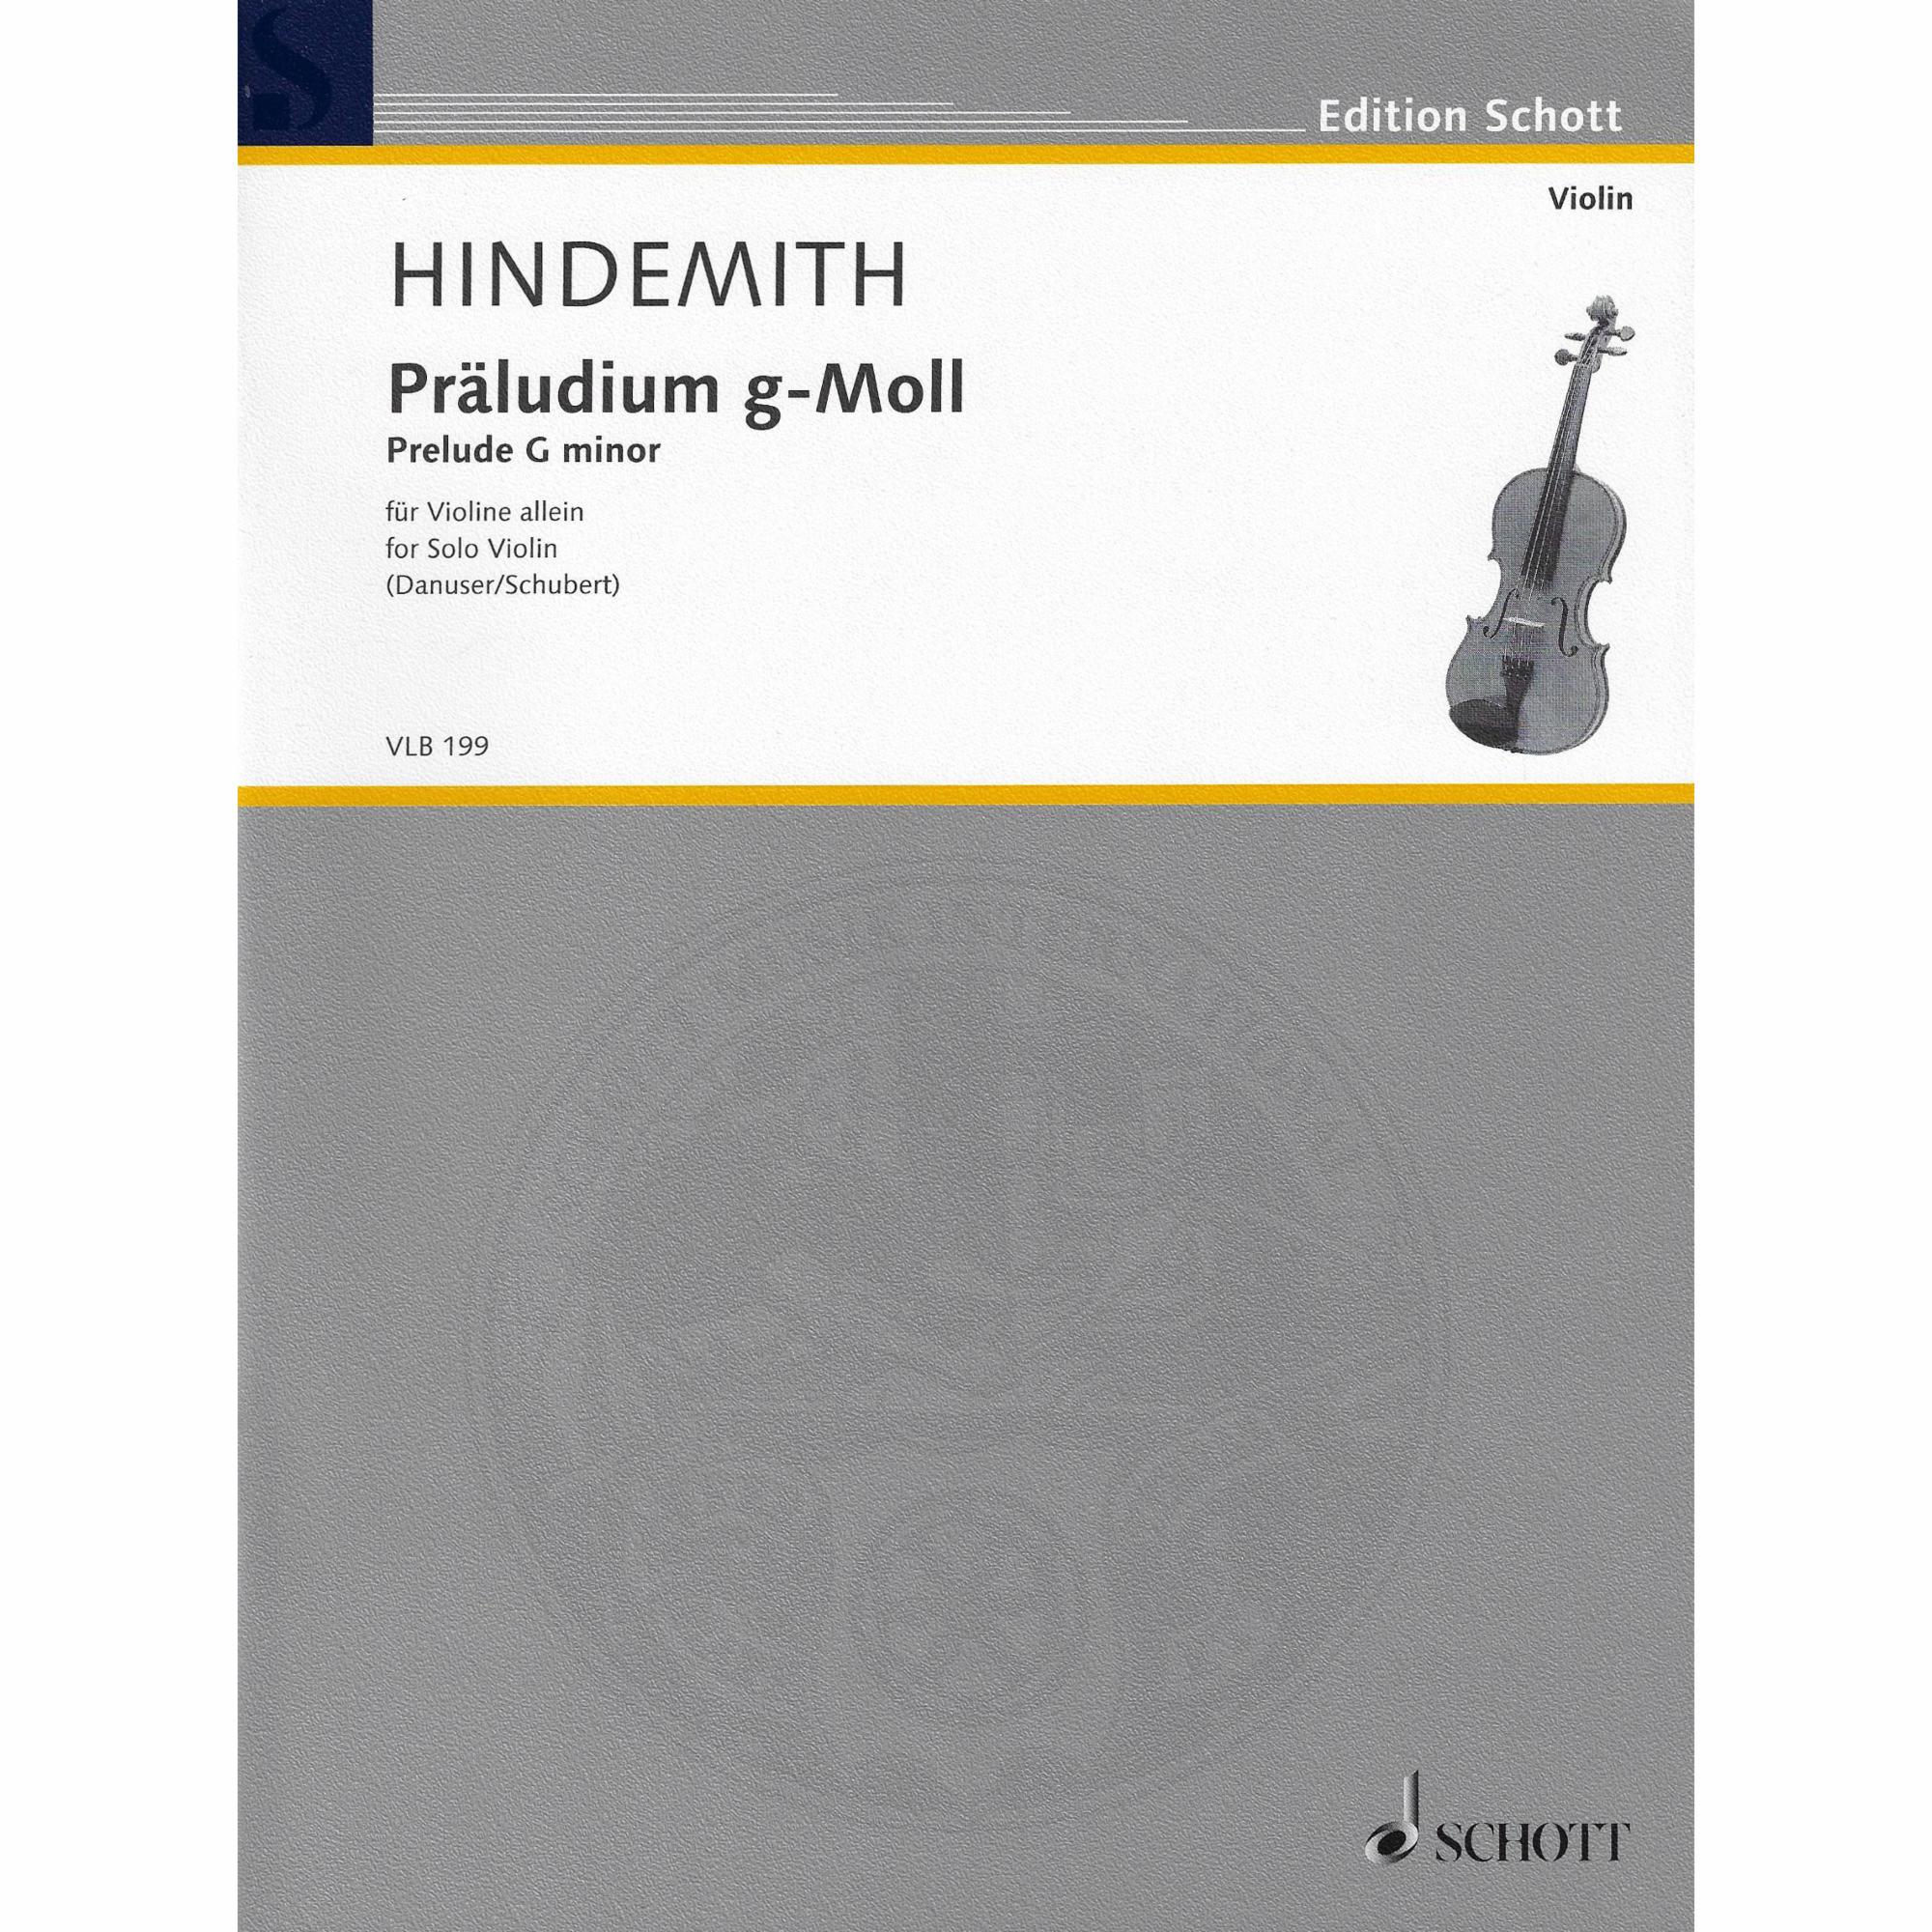 Hindemith -- Prelude in G Minor for Solo Violin